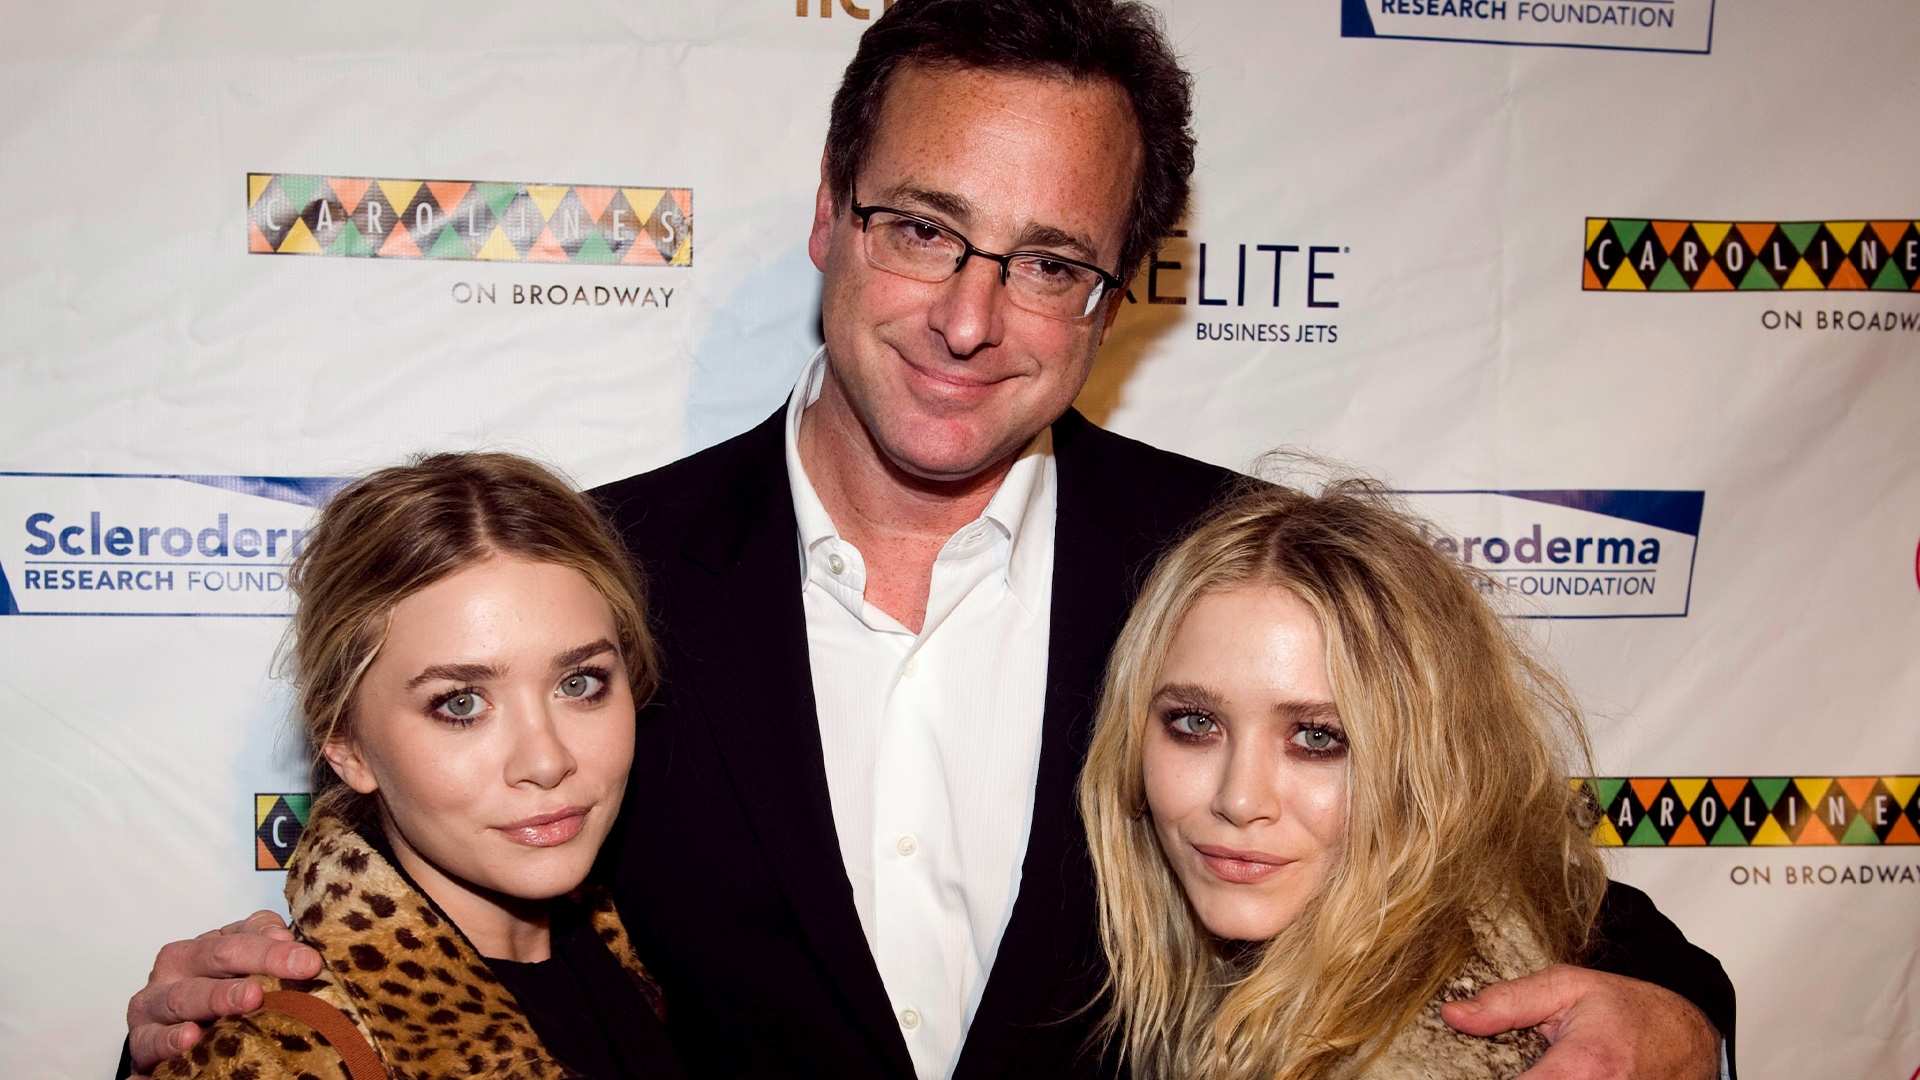 Ashley Olsen Reportedly Secretly Marries Artist Louis Eisner